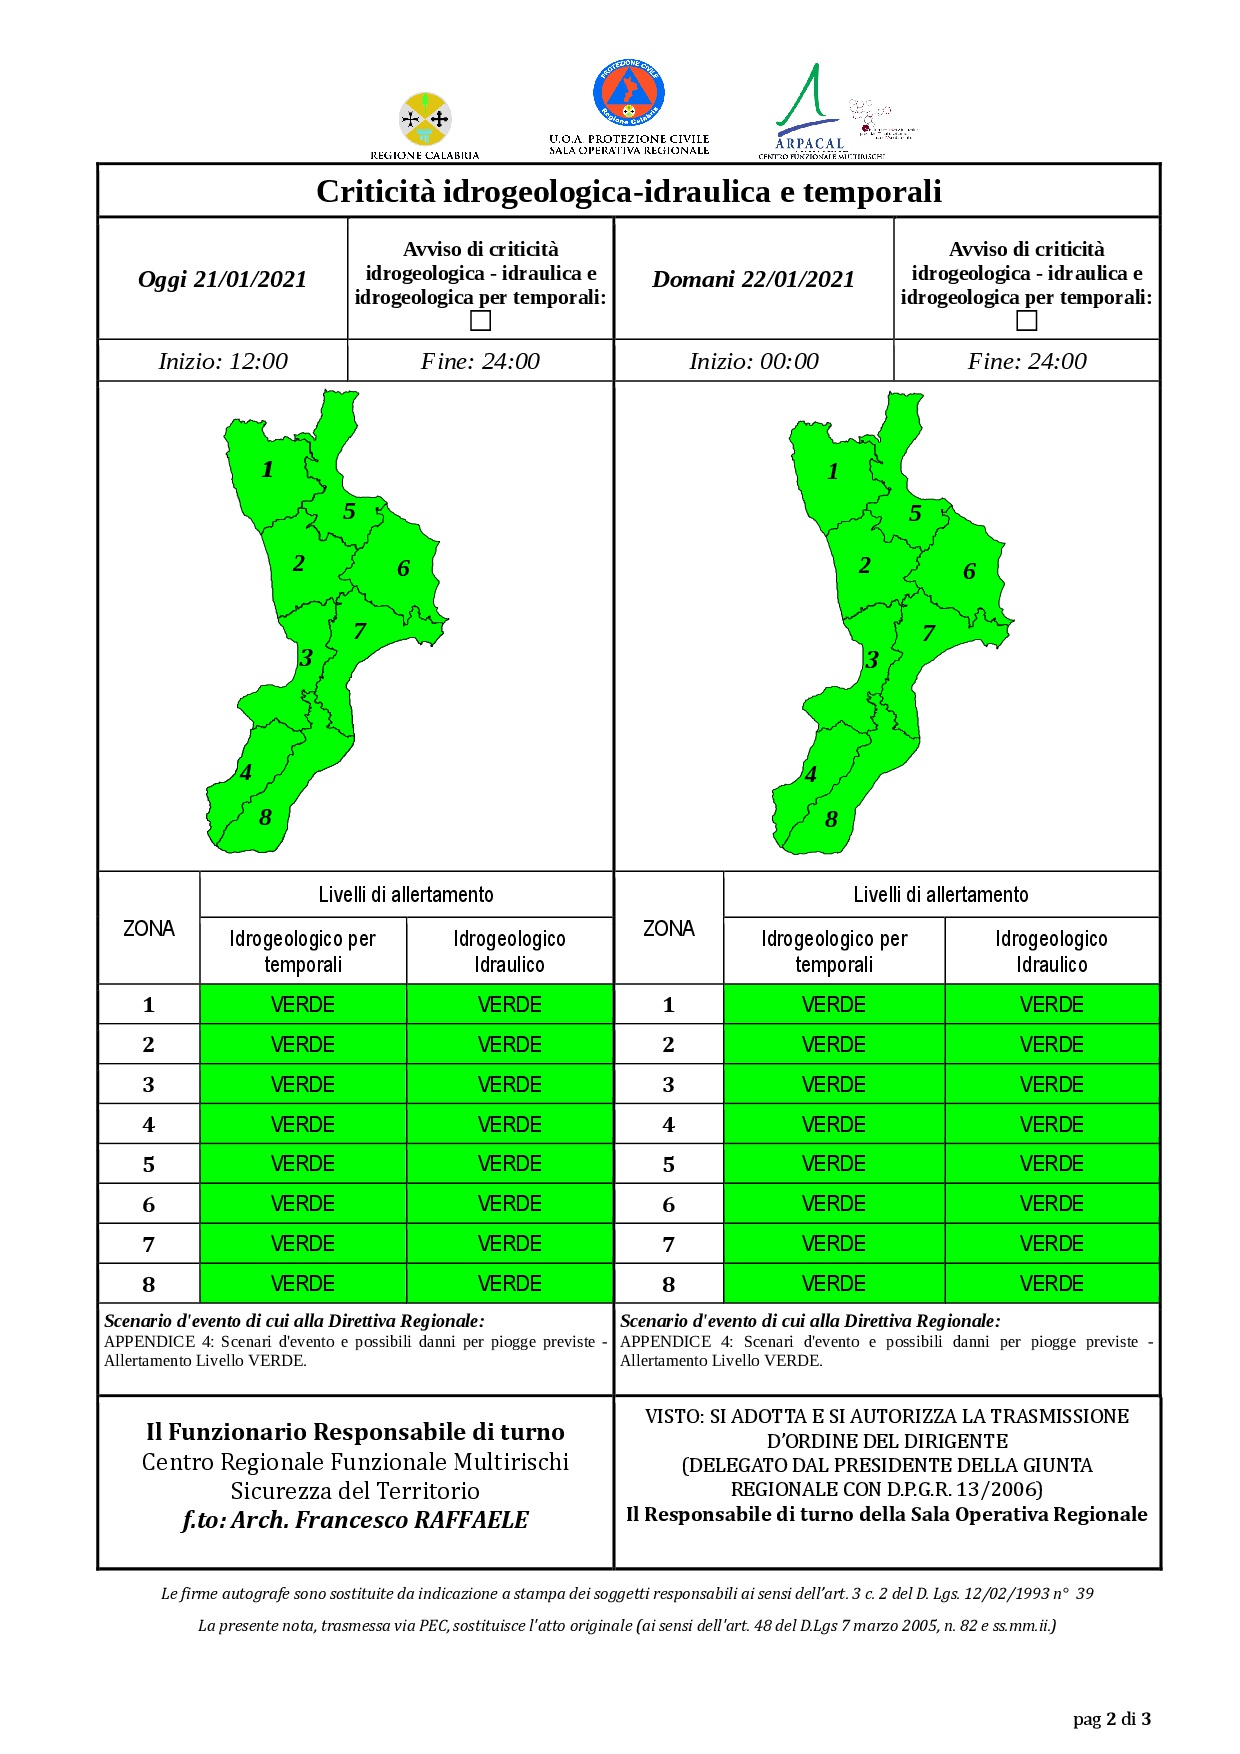 Criticità idrogeologica-idraulica e temporali in Calabria 21-01-2021